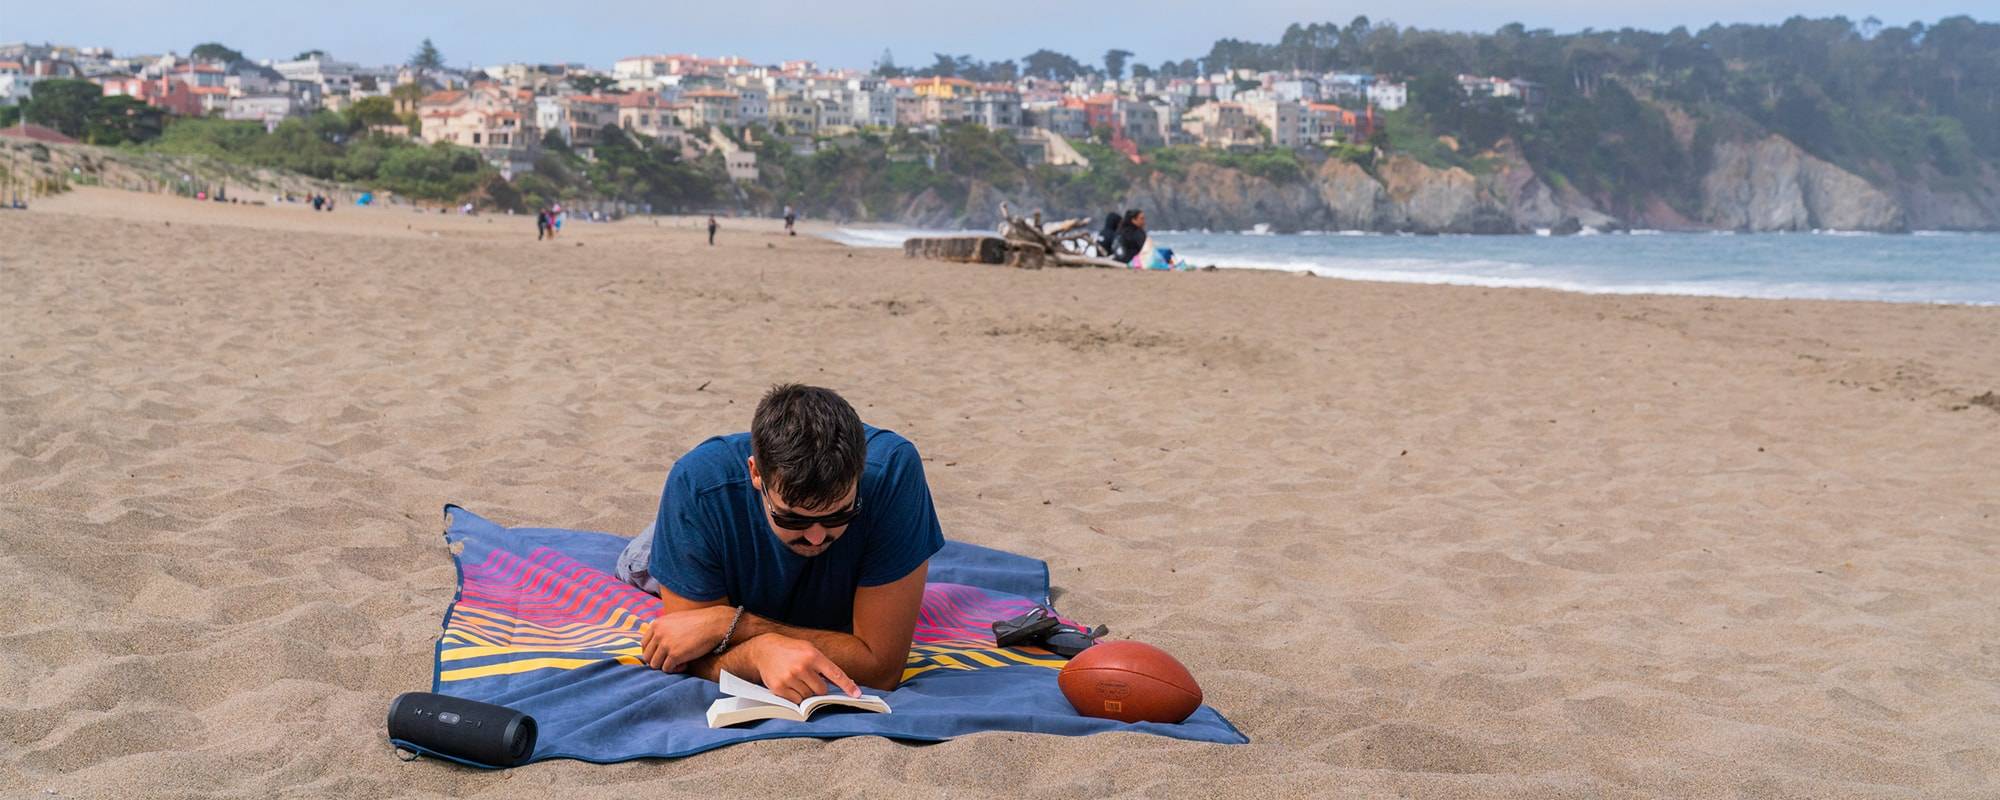 Man laying on beach on towel